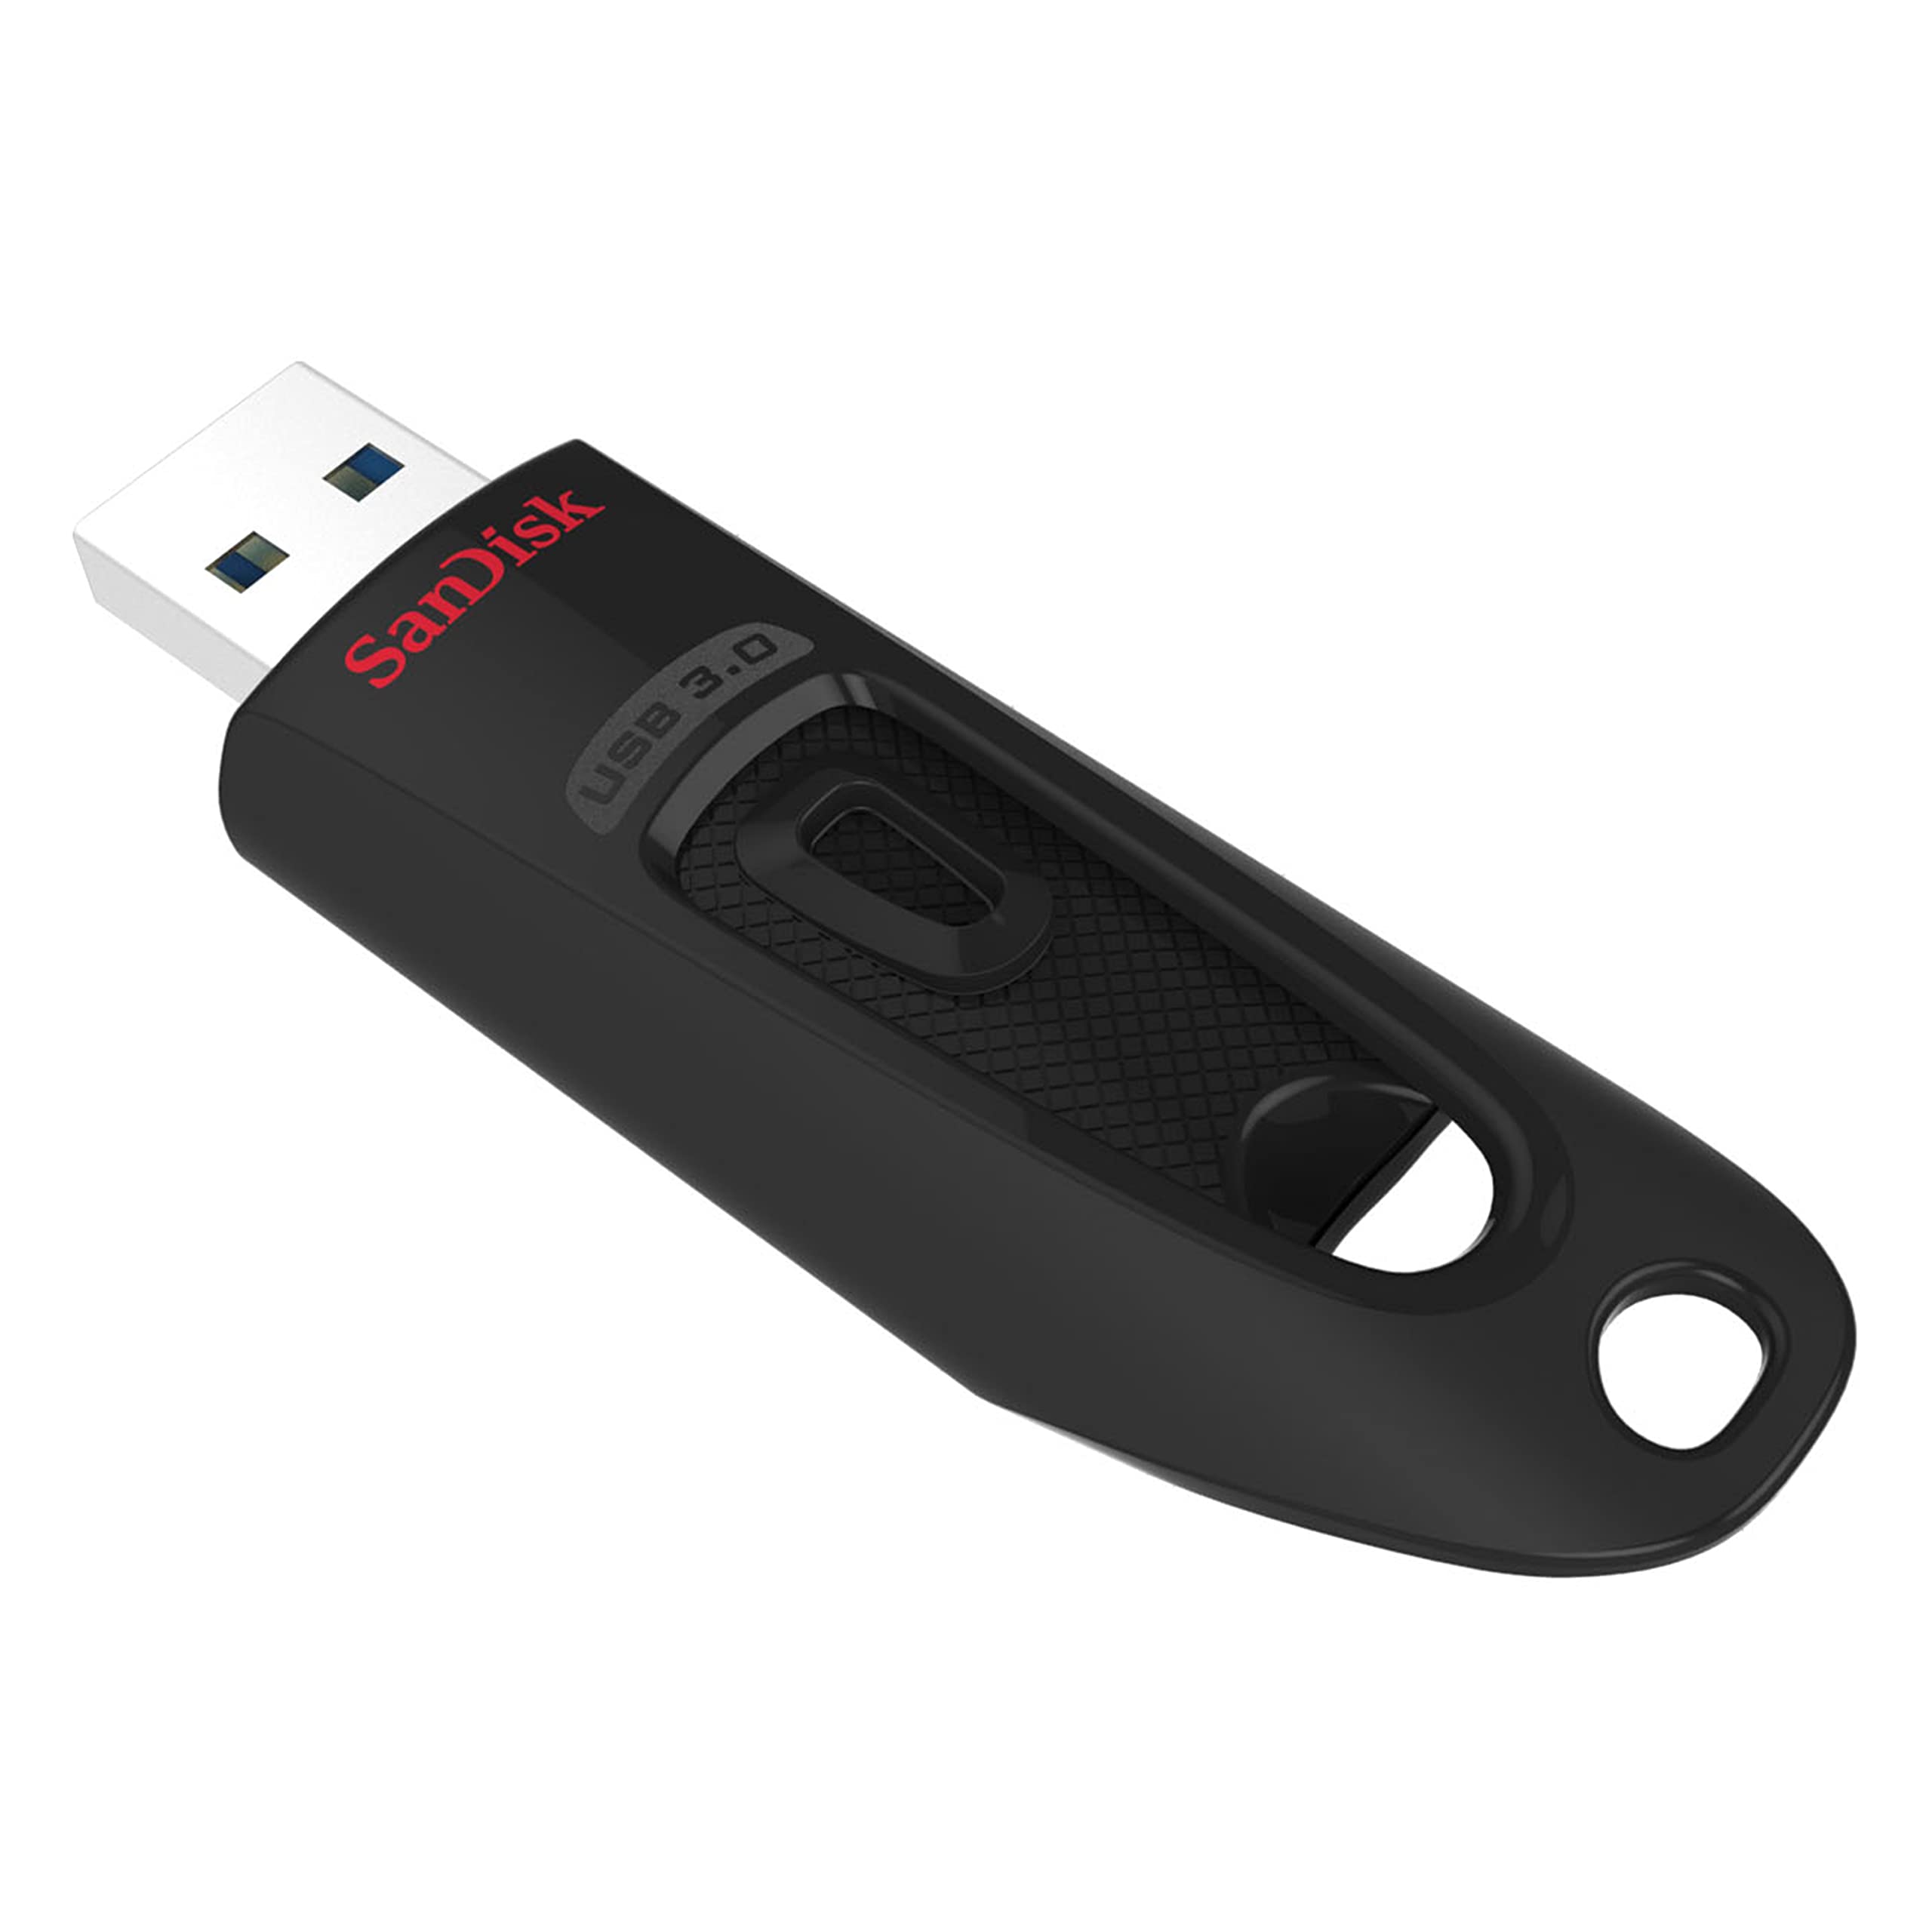 SanDisk 512GB Ultra USB 3.0 Flash Drive - SDCZ48-512G-G46, Black